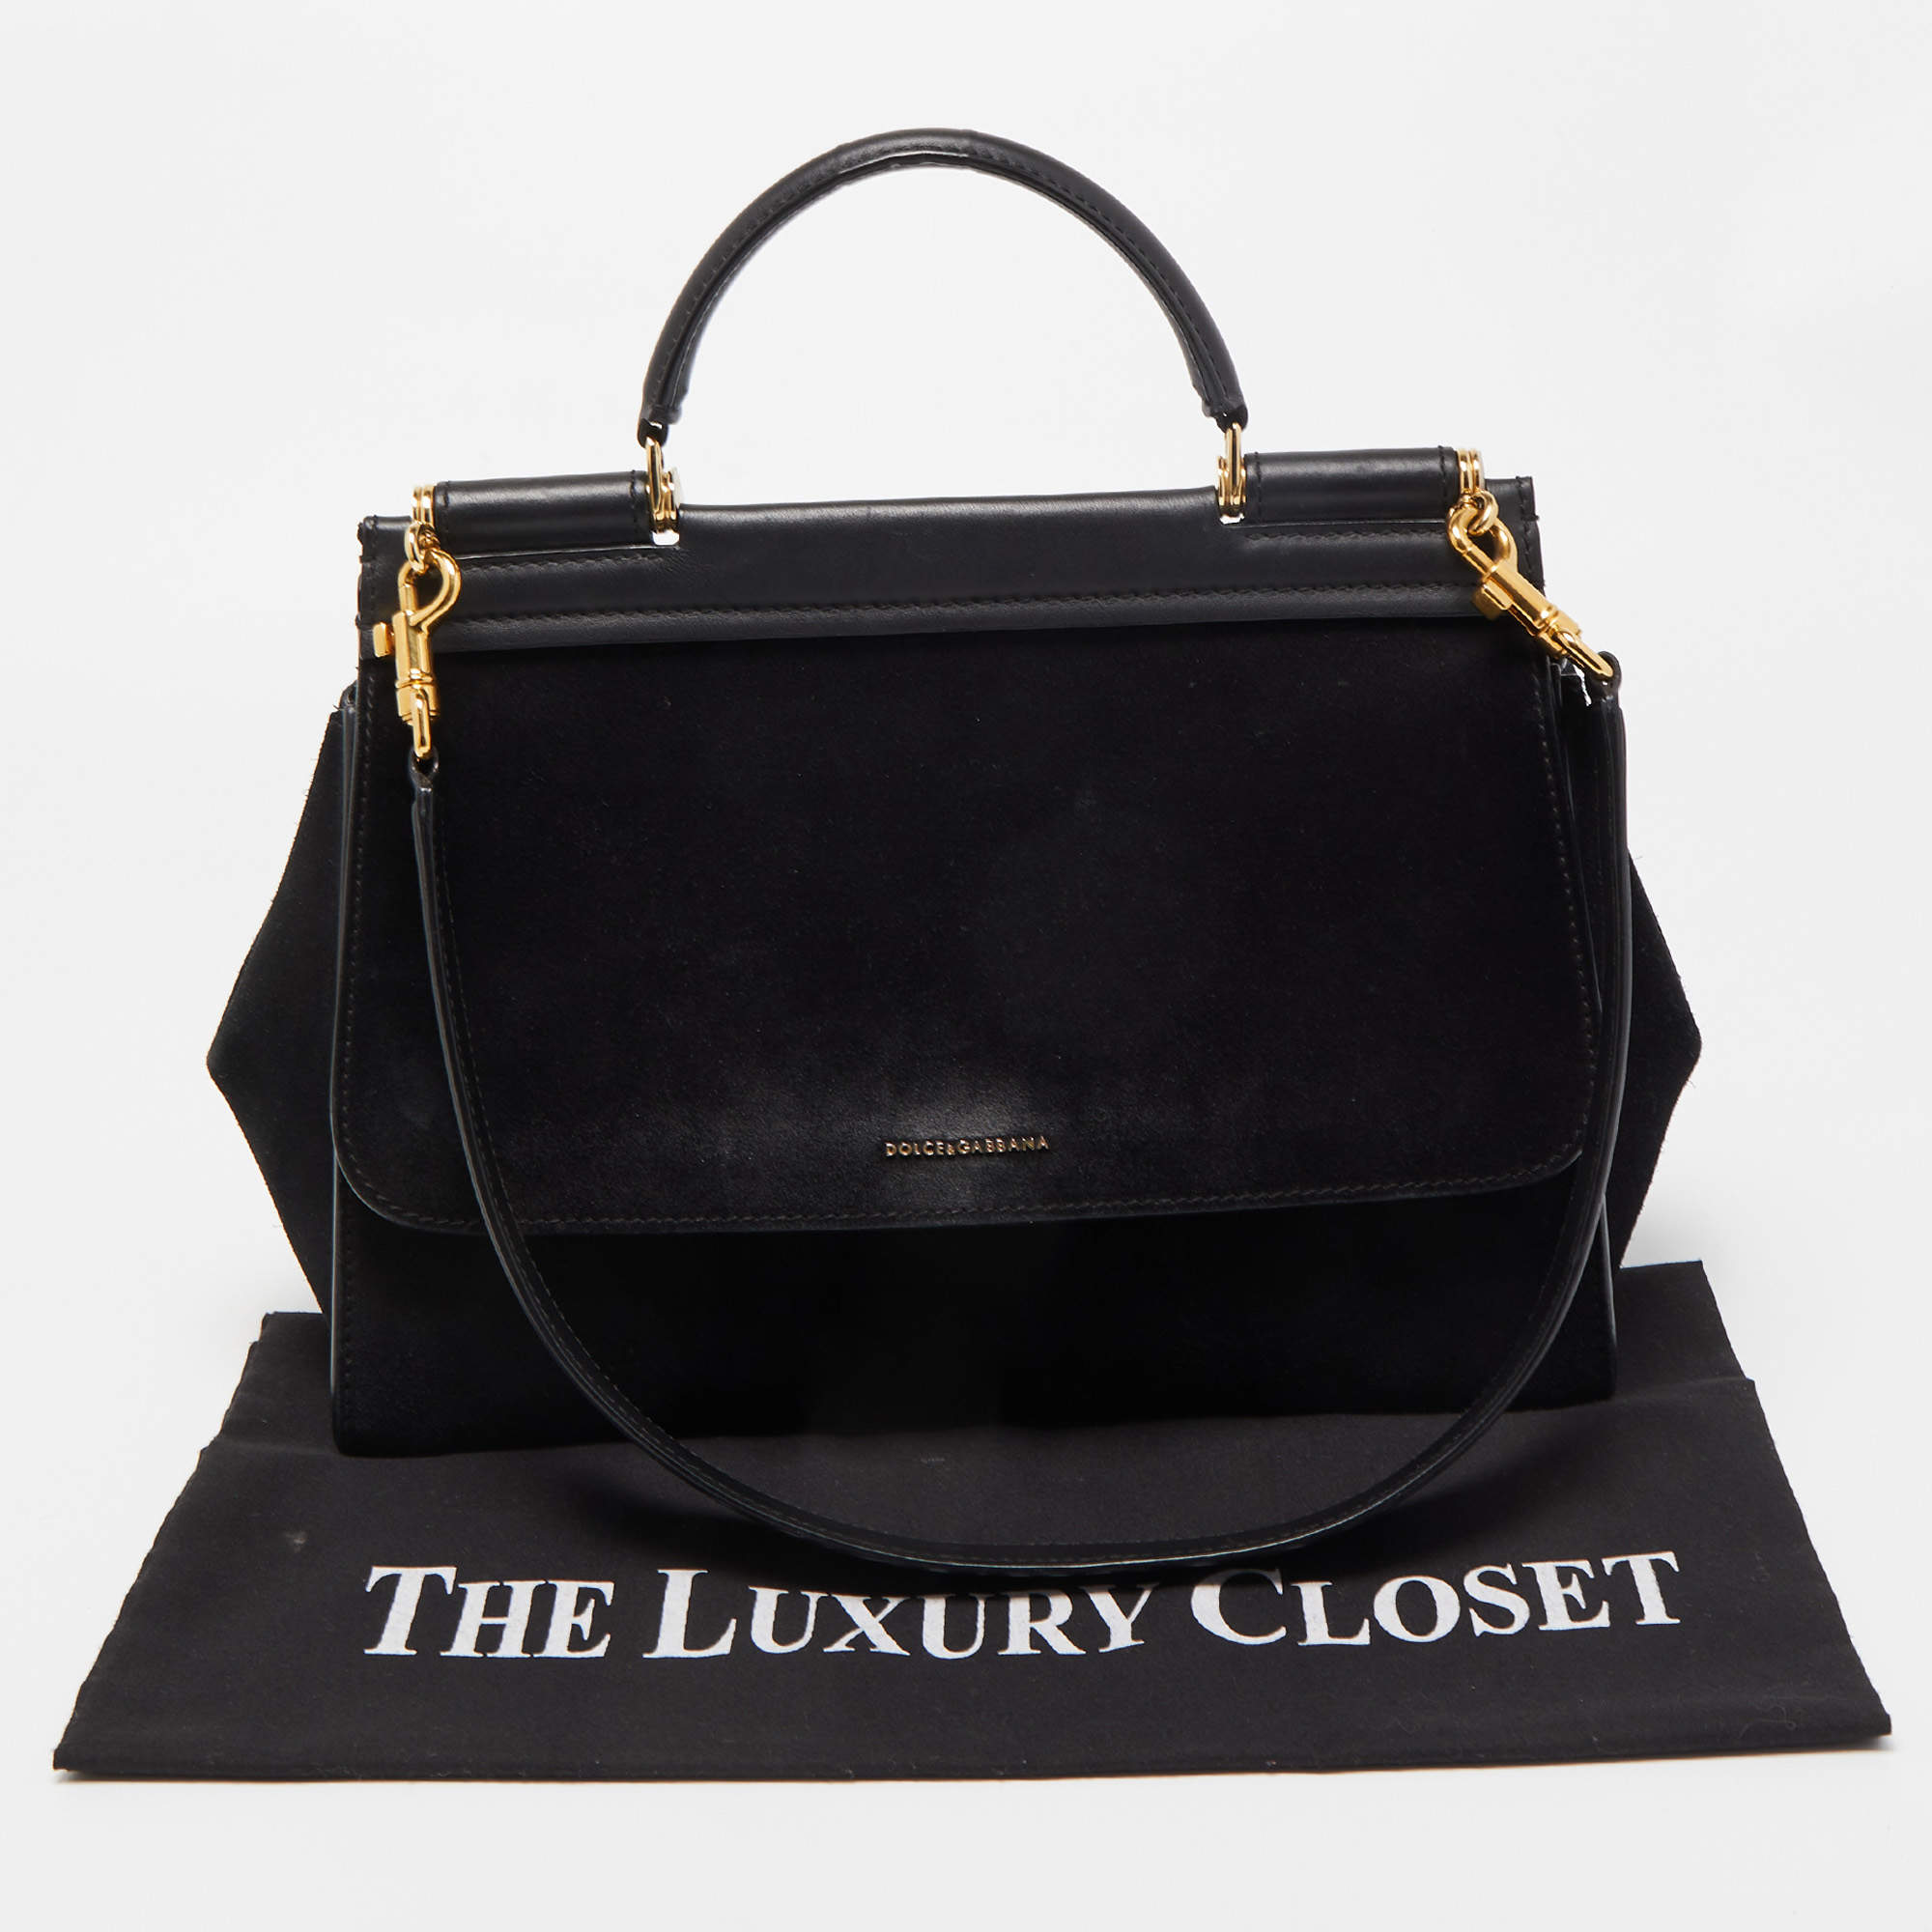 Dolce & Gabbana Sicily Soft Handbag in Black